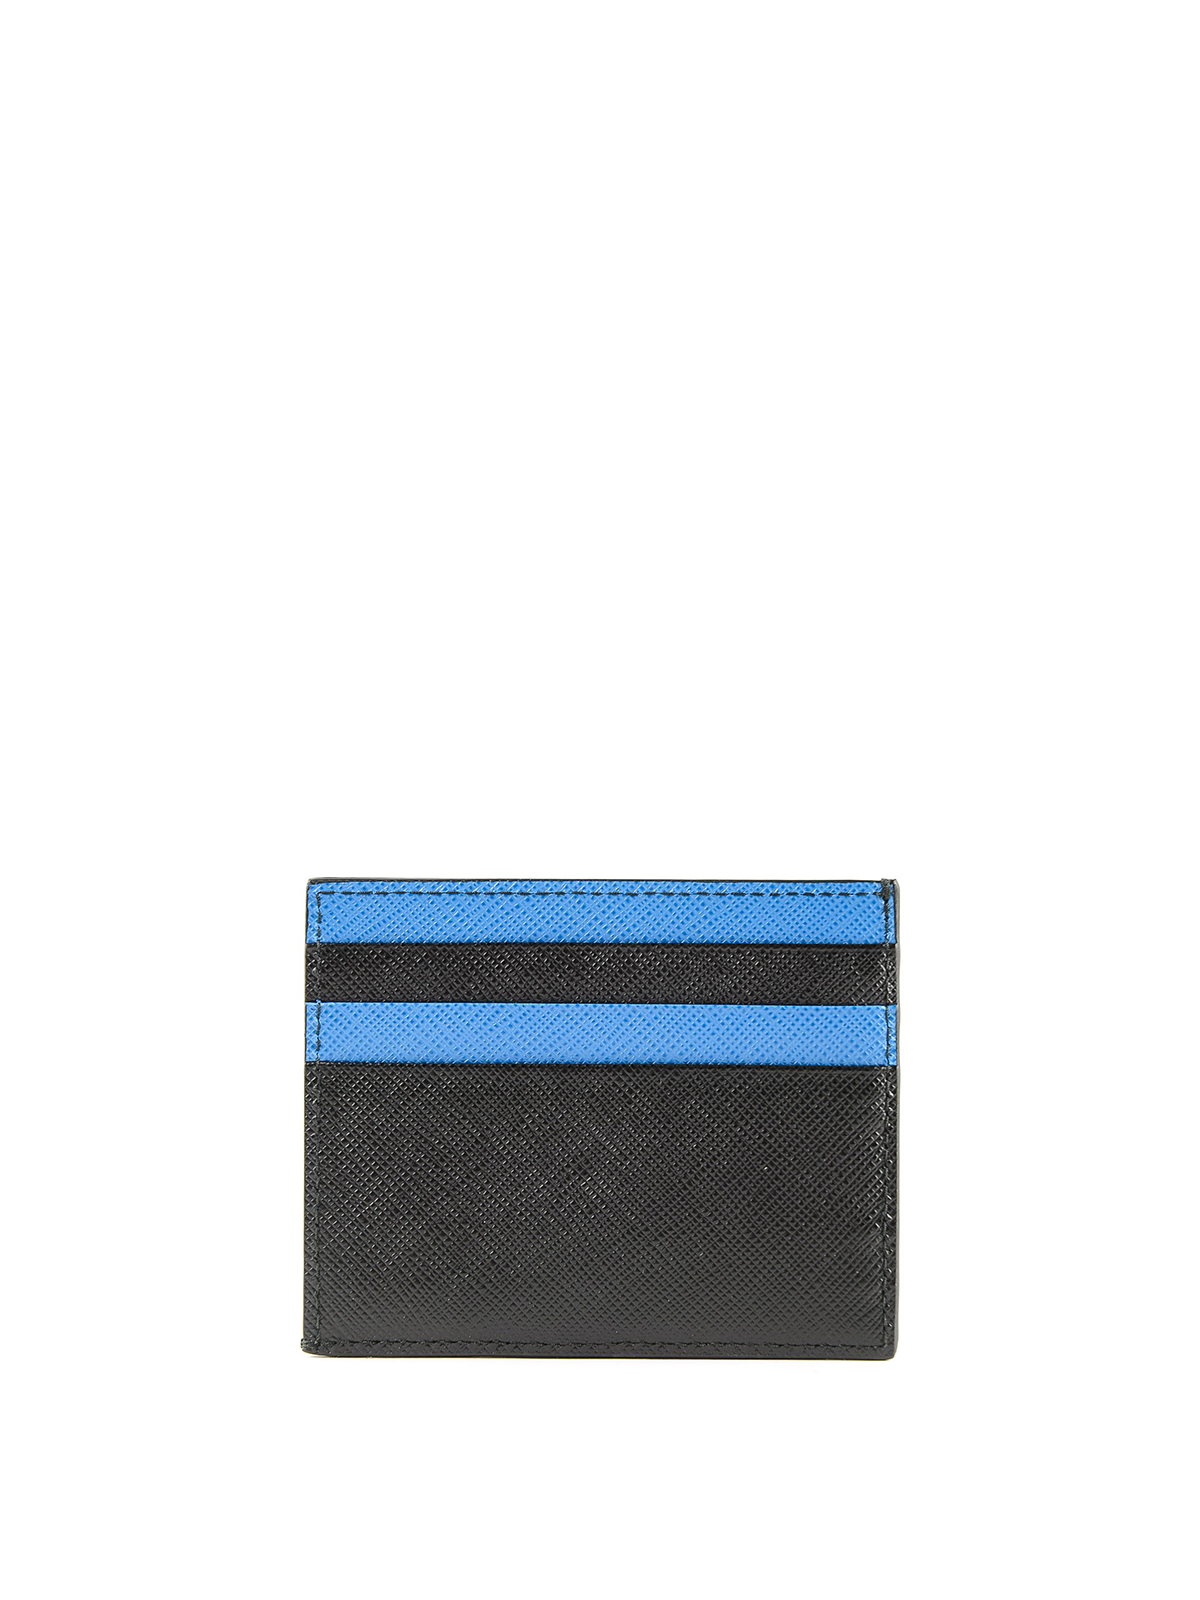 Prada Black Saffiano Leather Card Holder with Strap Prada